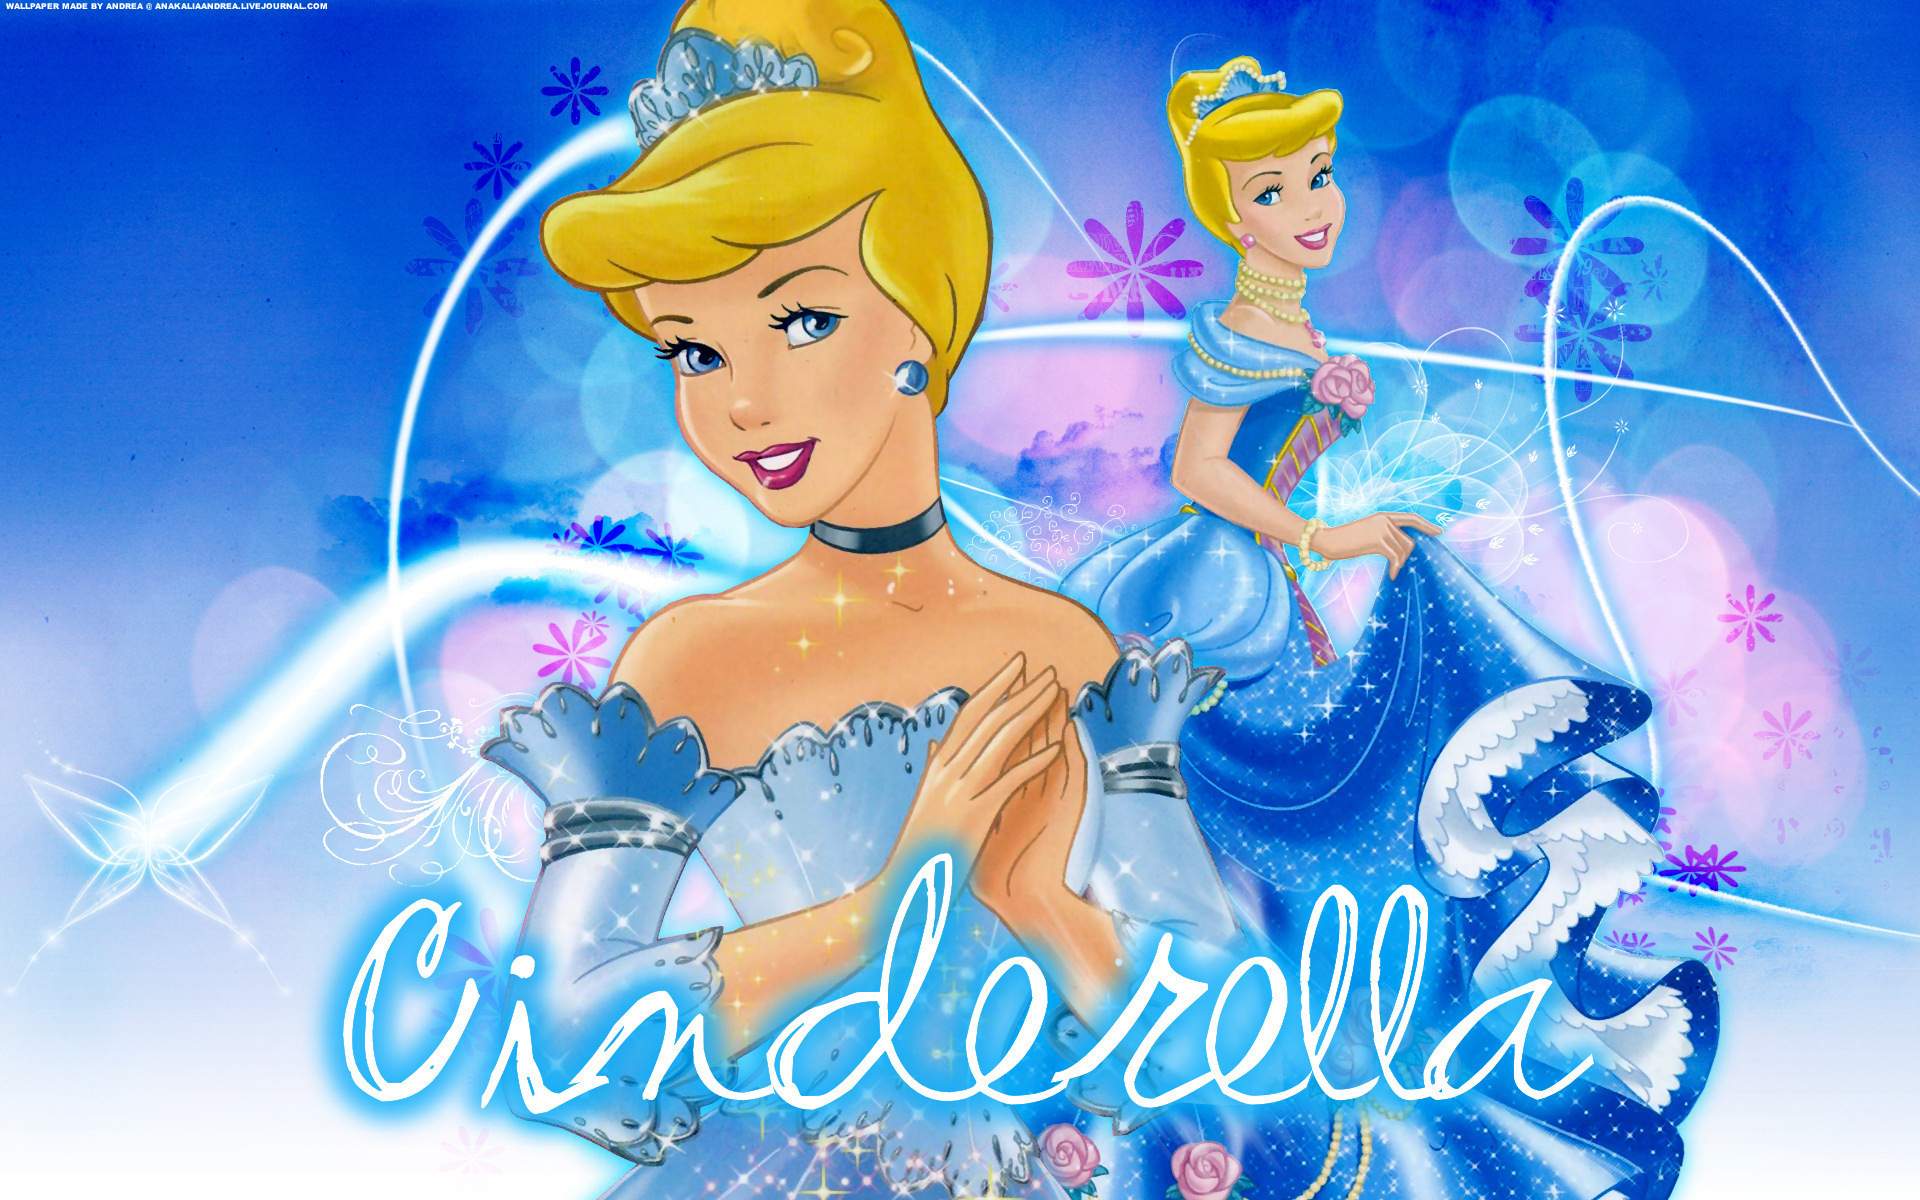 Cinderella - cinderella and prince charming Wallpaper (19750146) - Fanpop